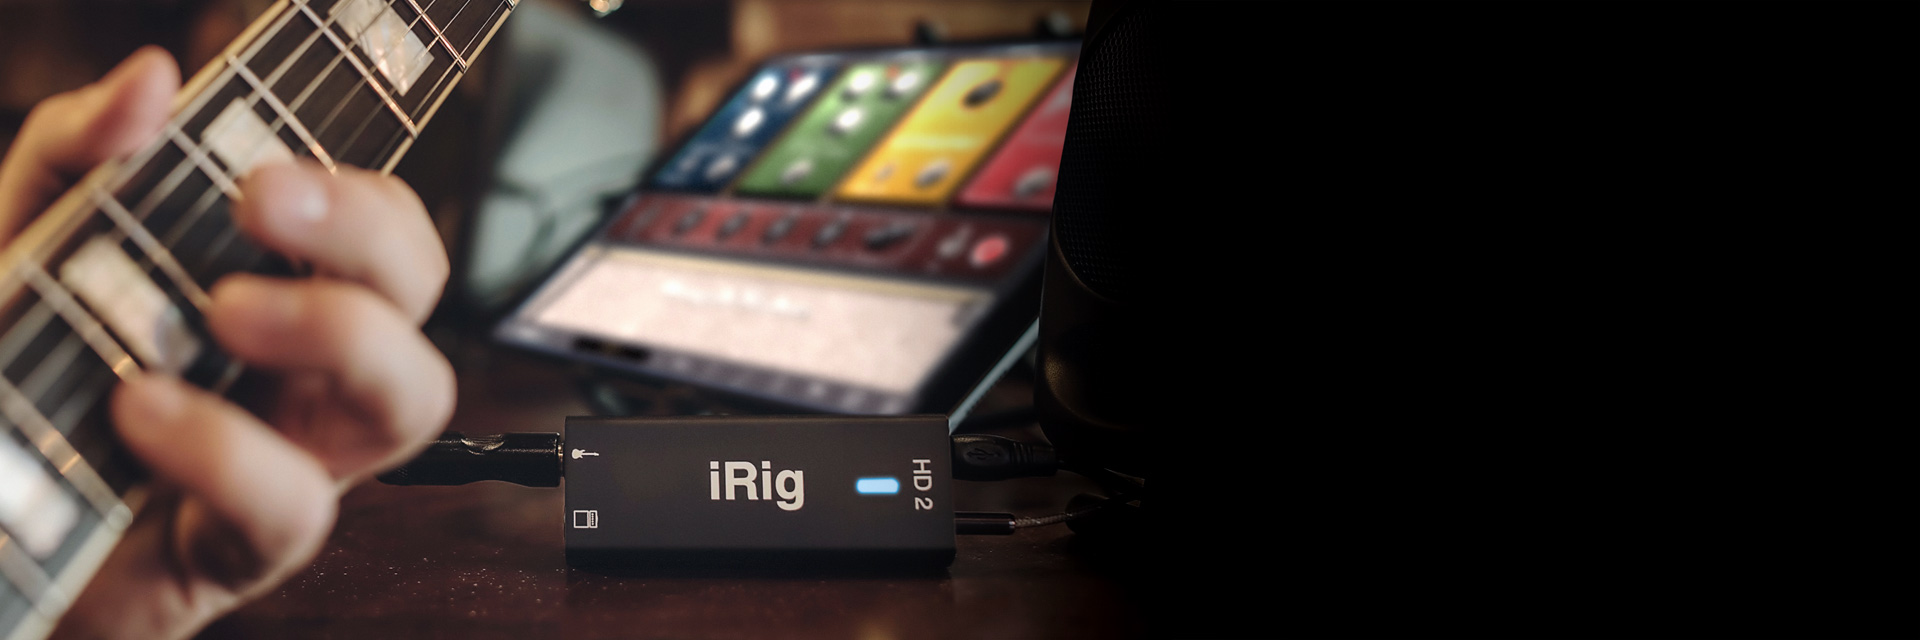 irig app for mac